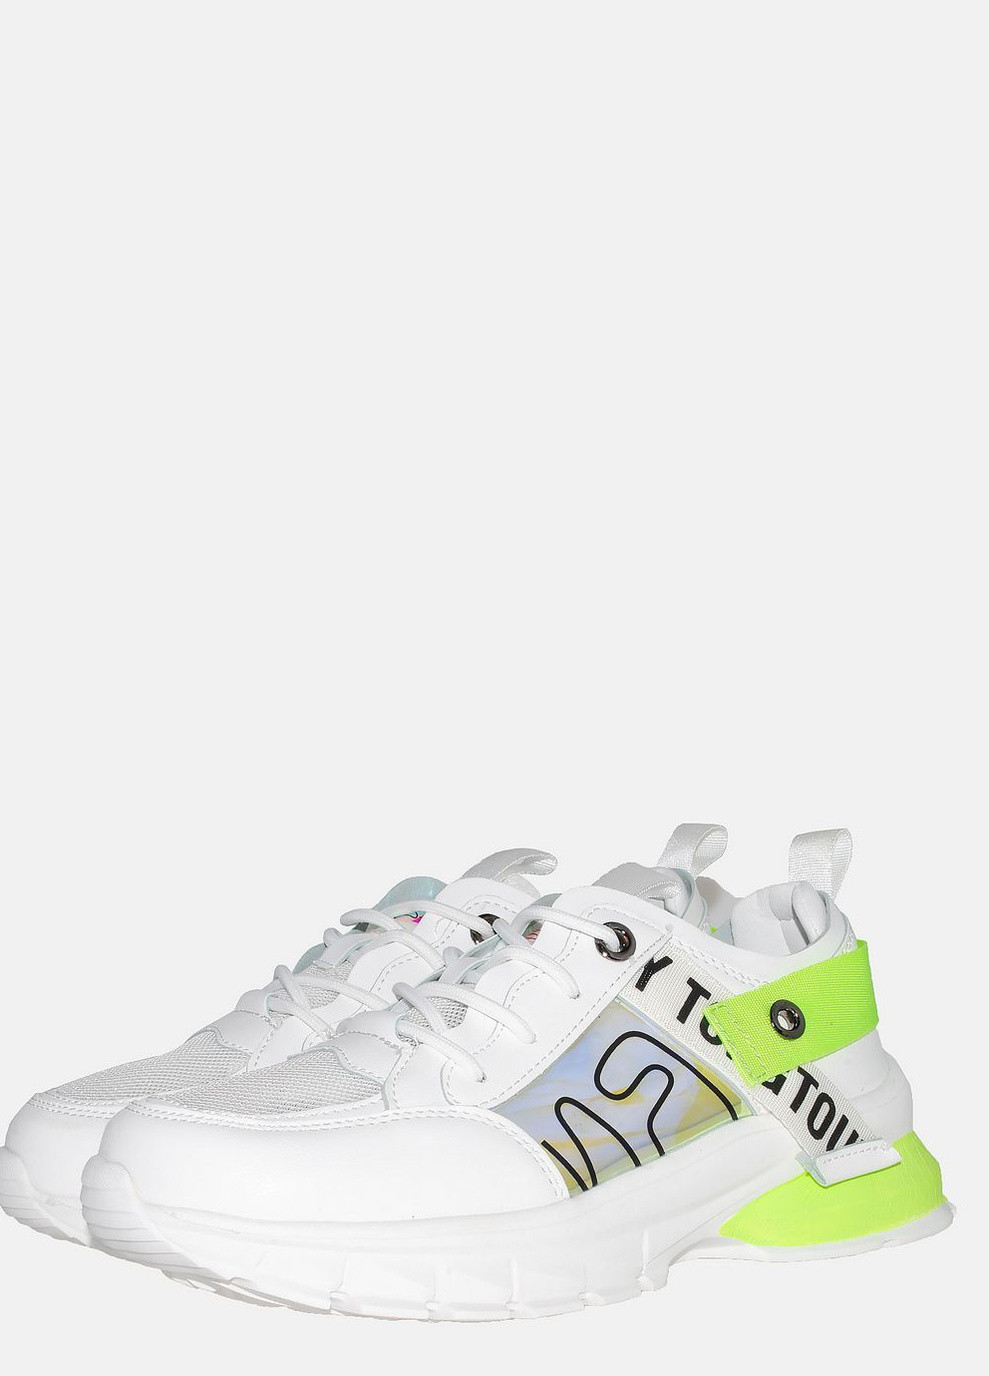 Білі осінні кросівки st3700-8 white-green Stilli